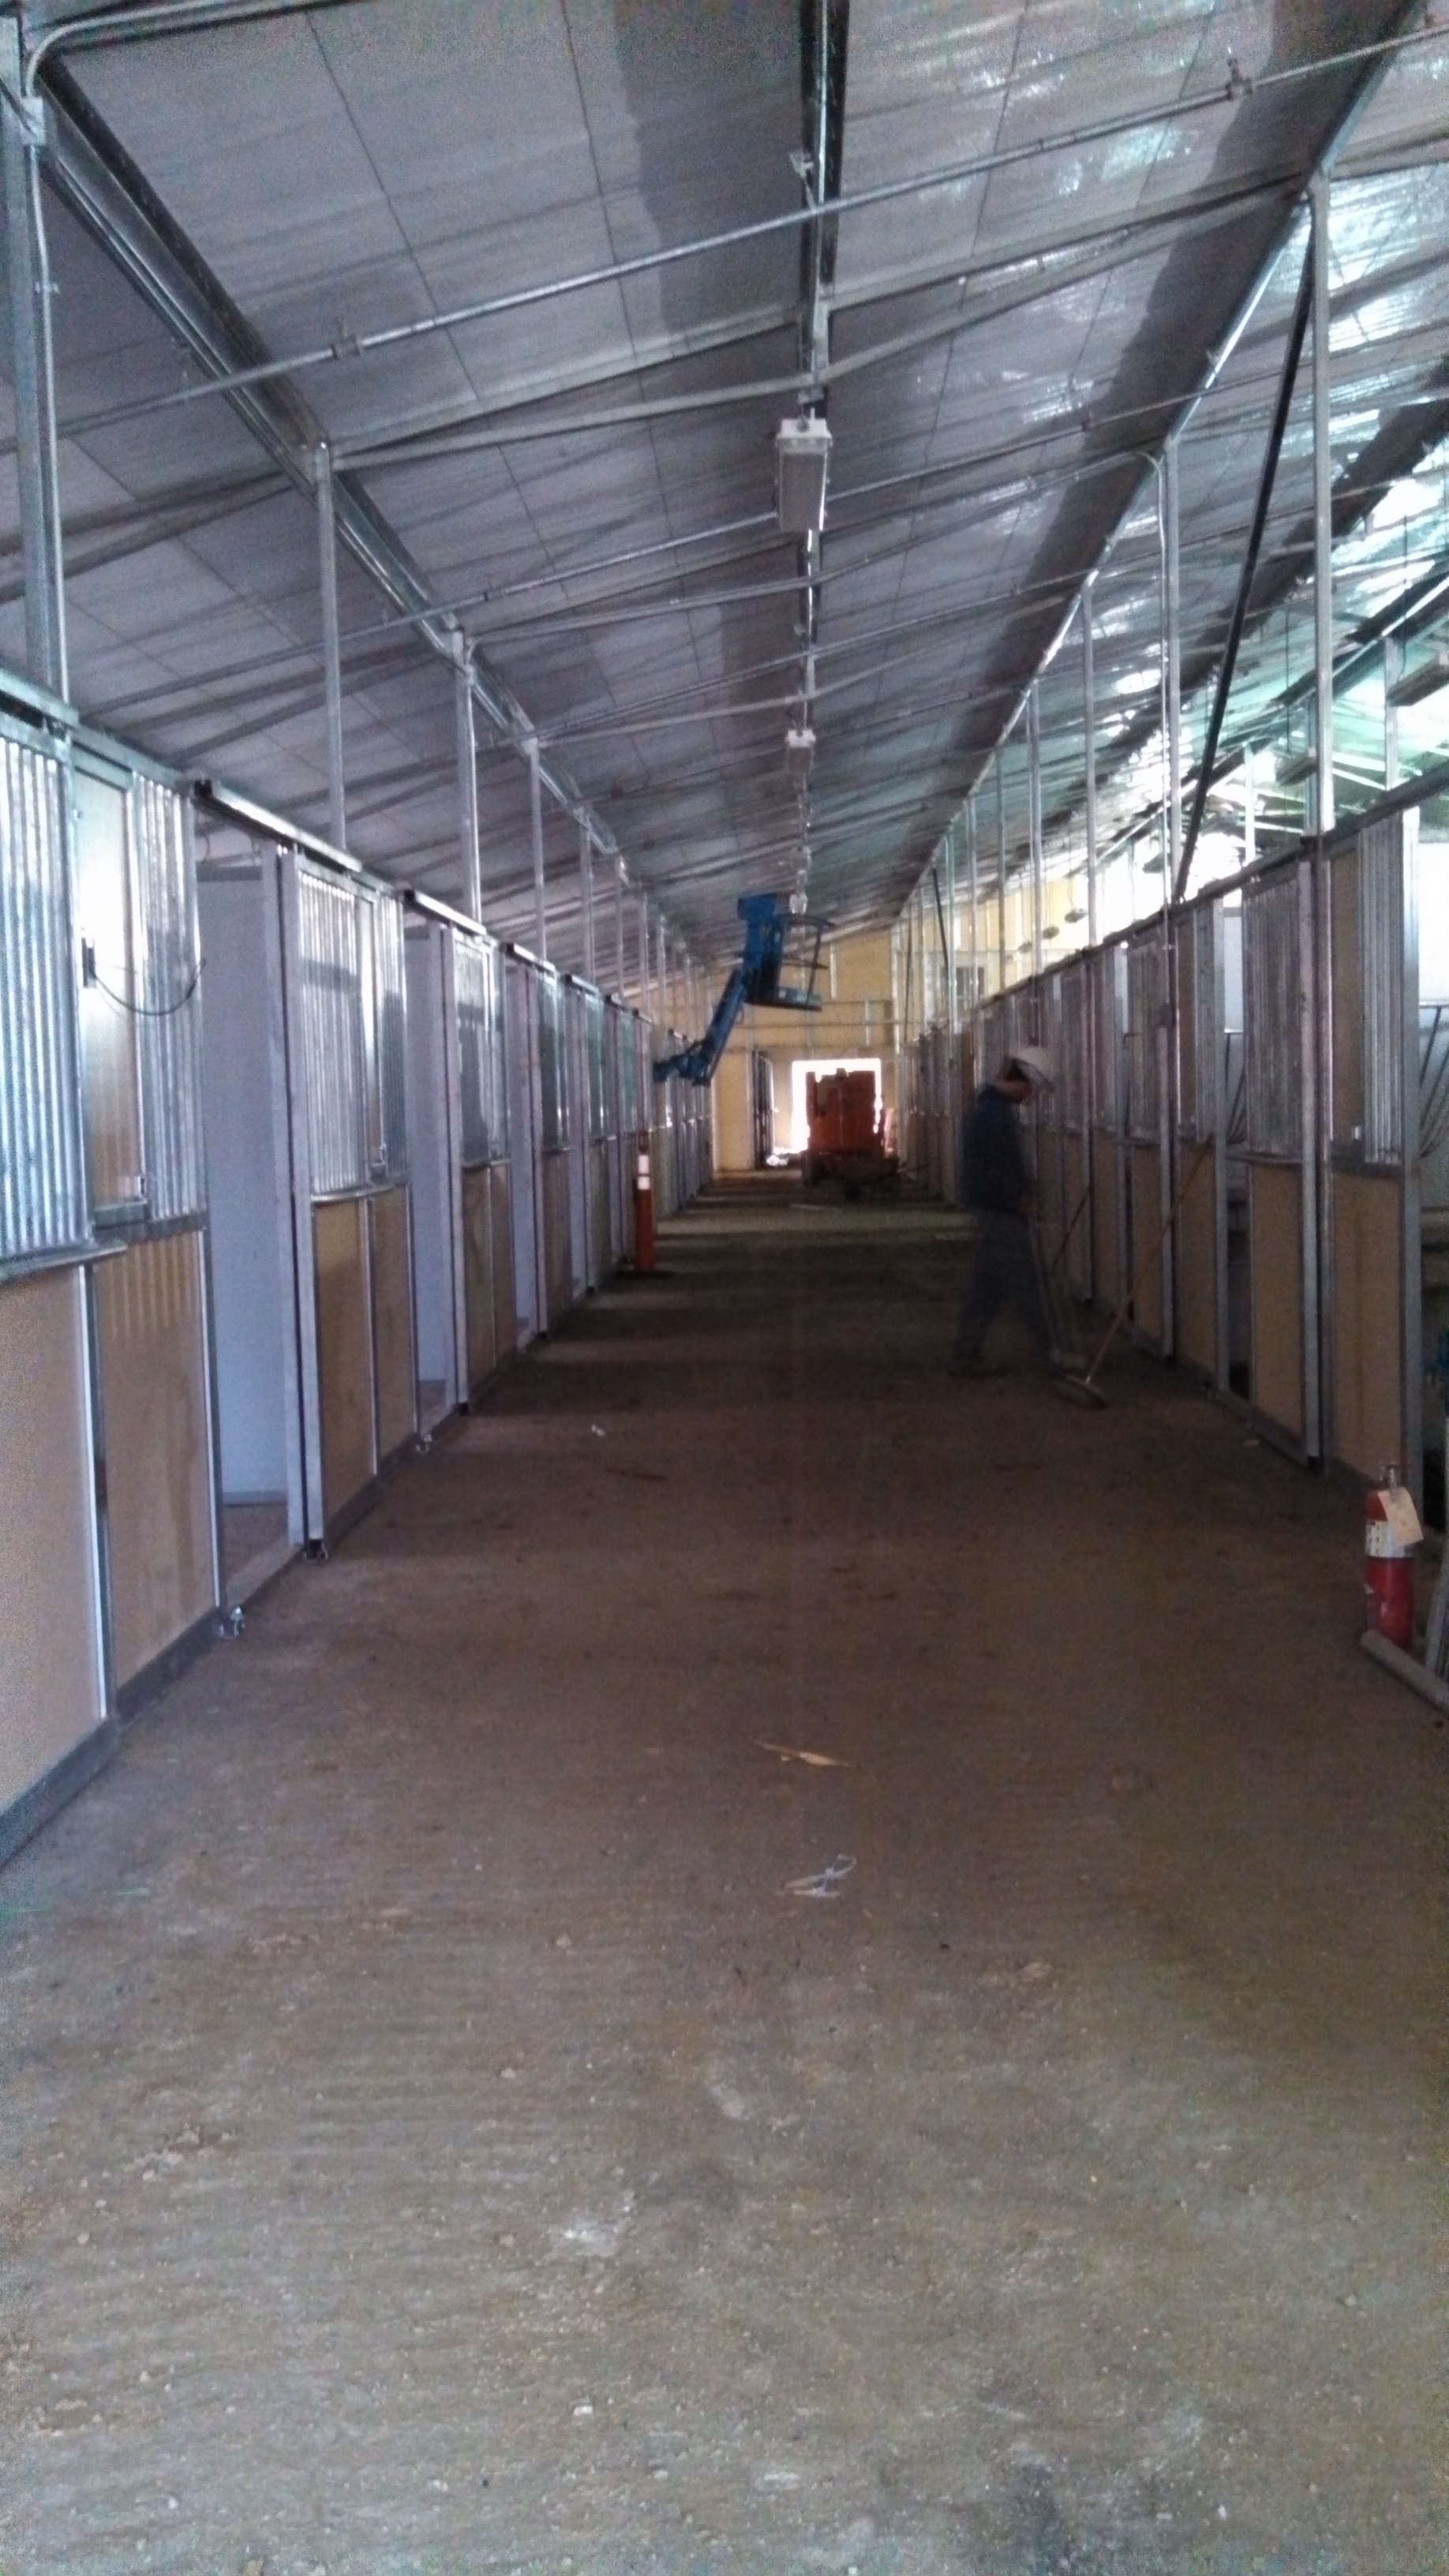 4 Stall Horse Barn Plans